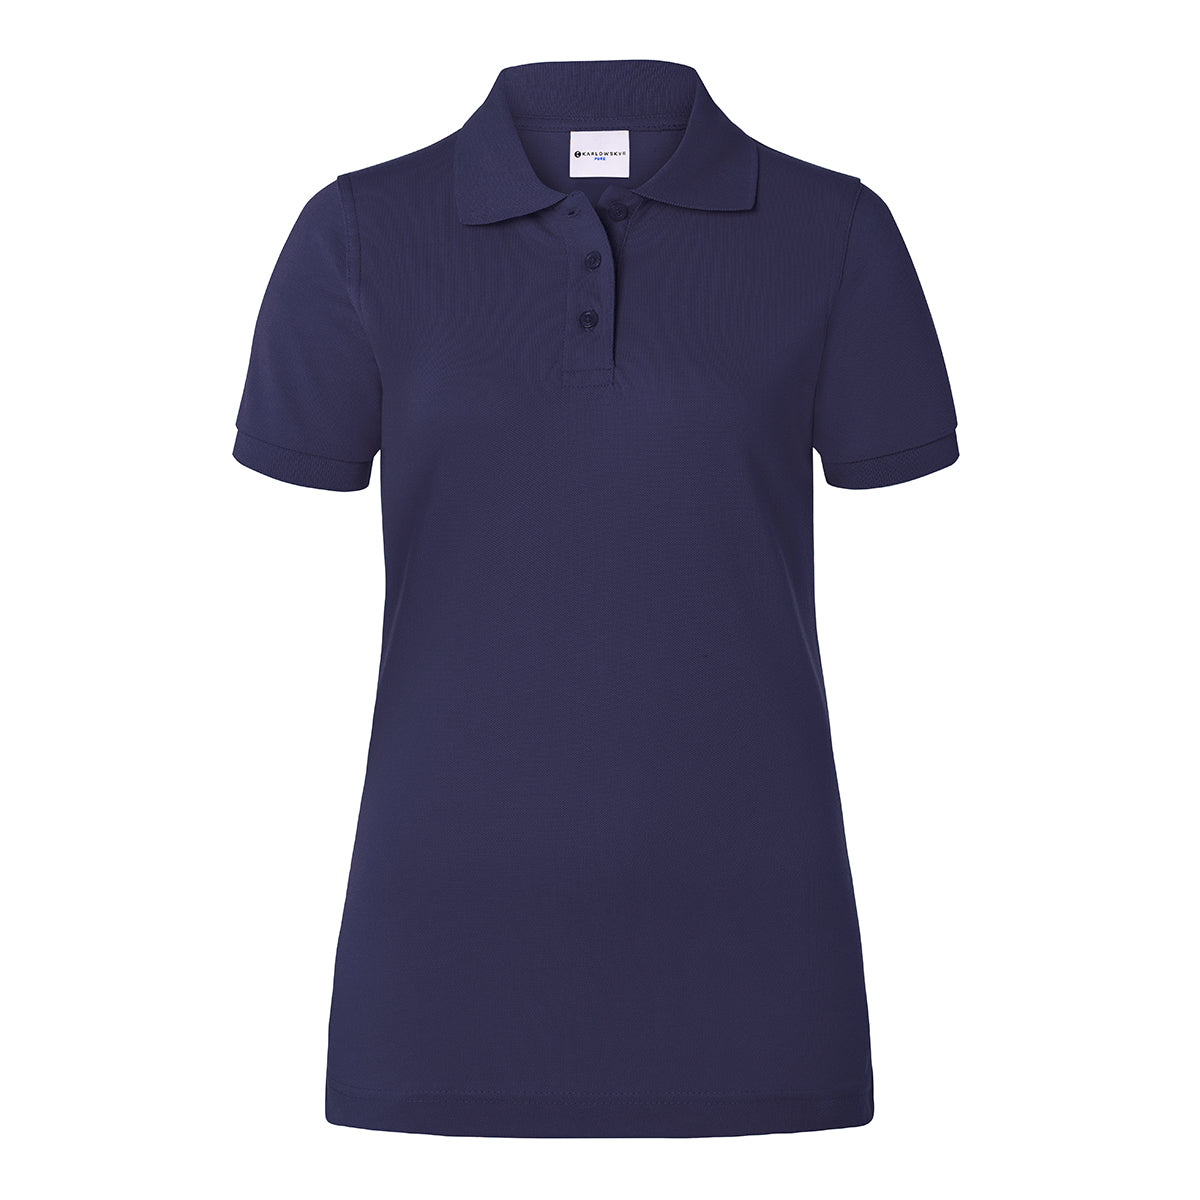 Karlowsky - Arbejdsbeklædning Basic Poloshirt til damer - Navy - Størrelse: 2XL